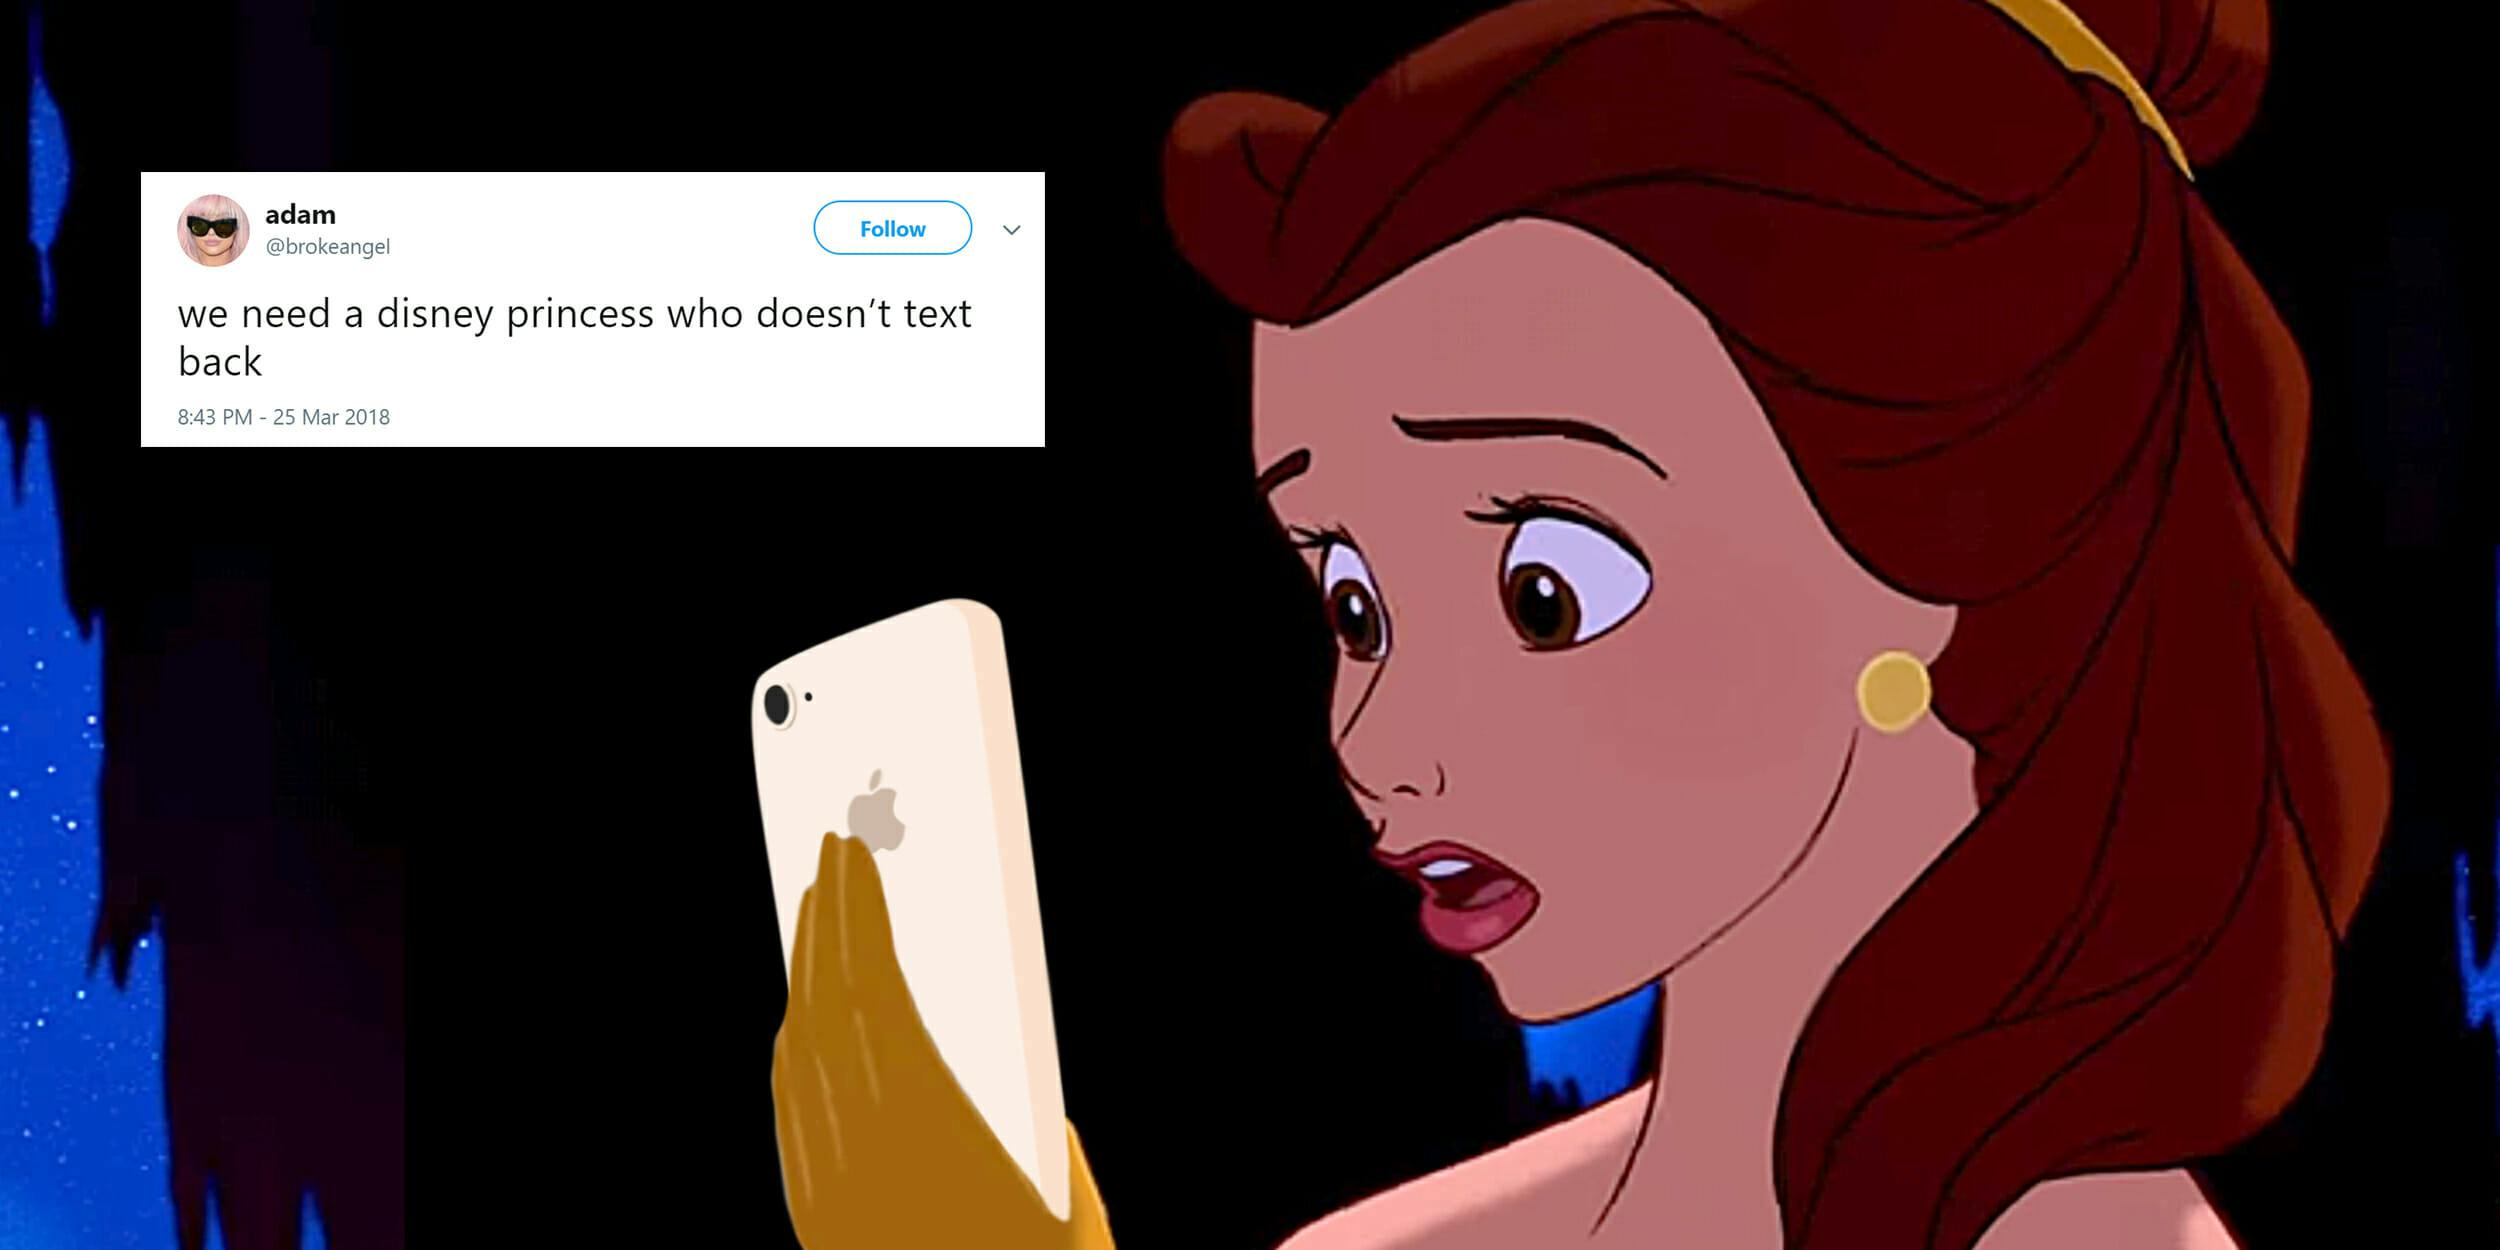 We Need A Disney Princess Who Gets This Meme